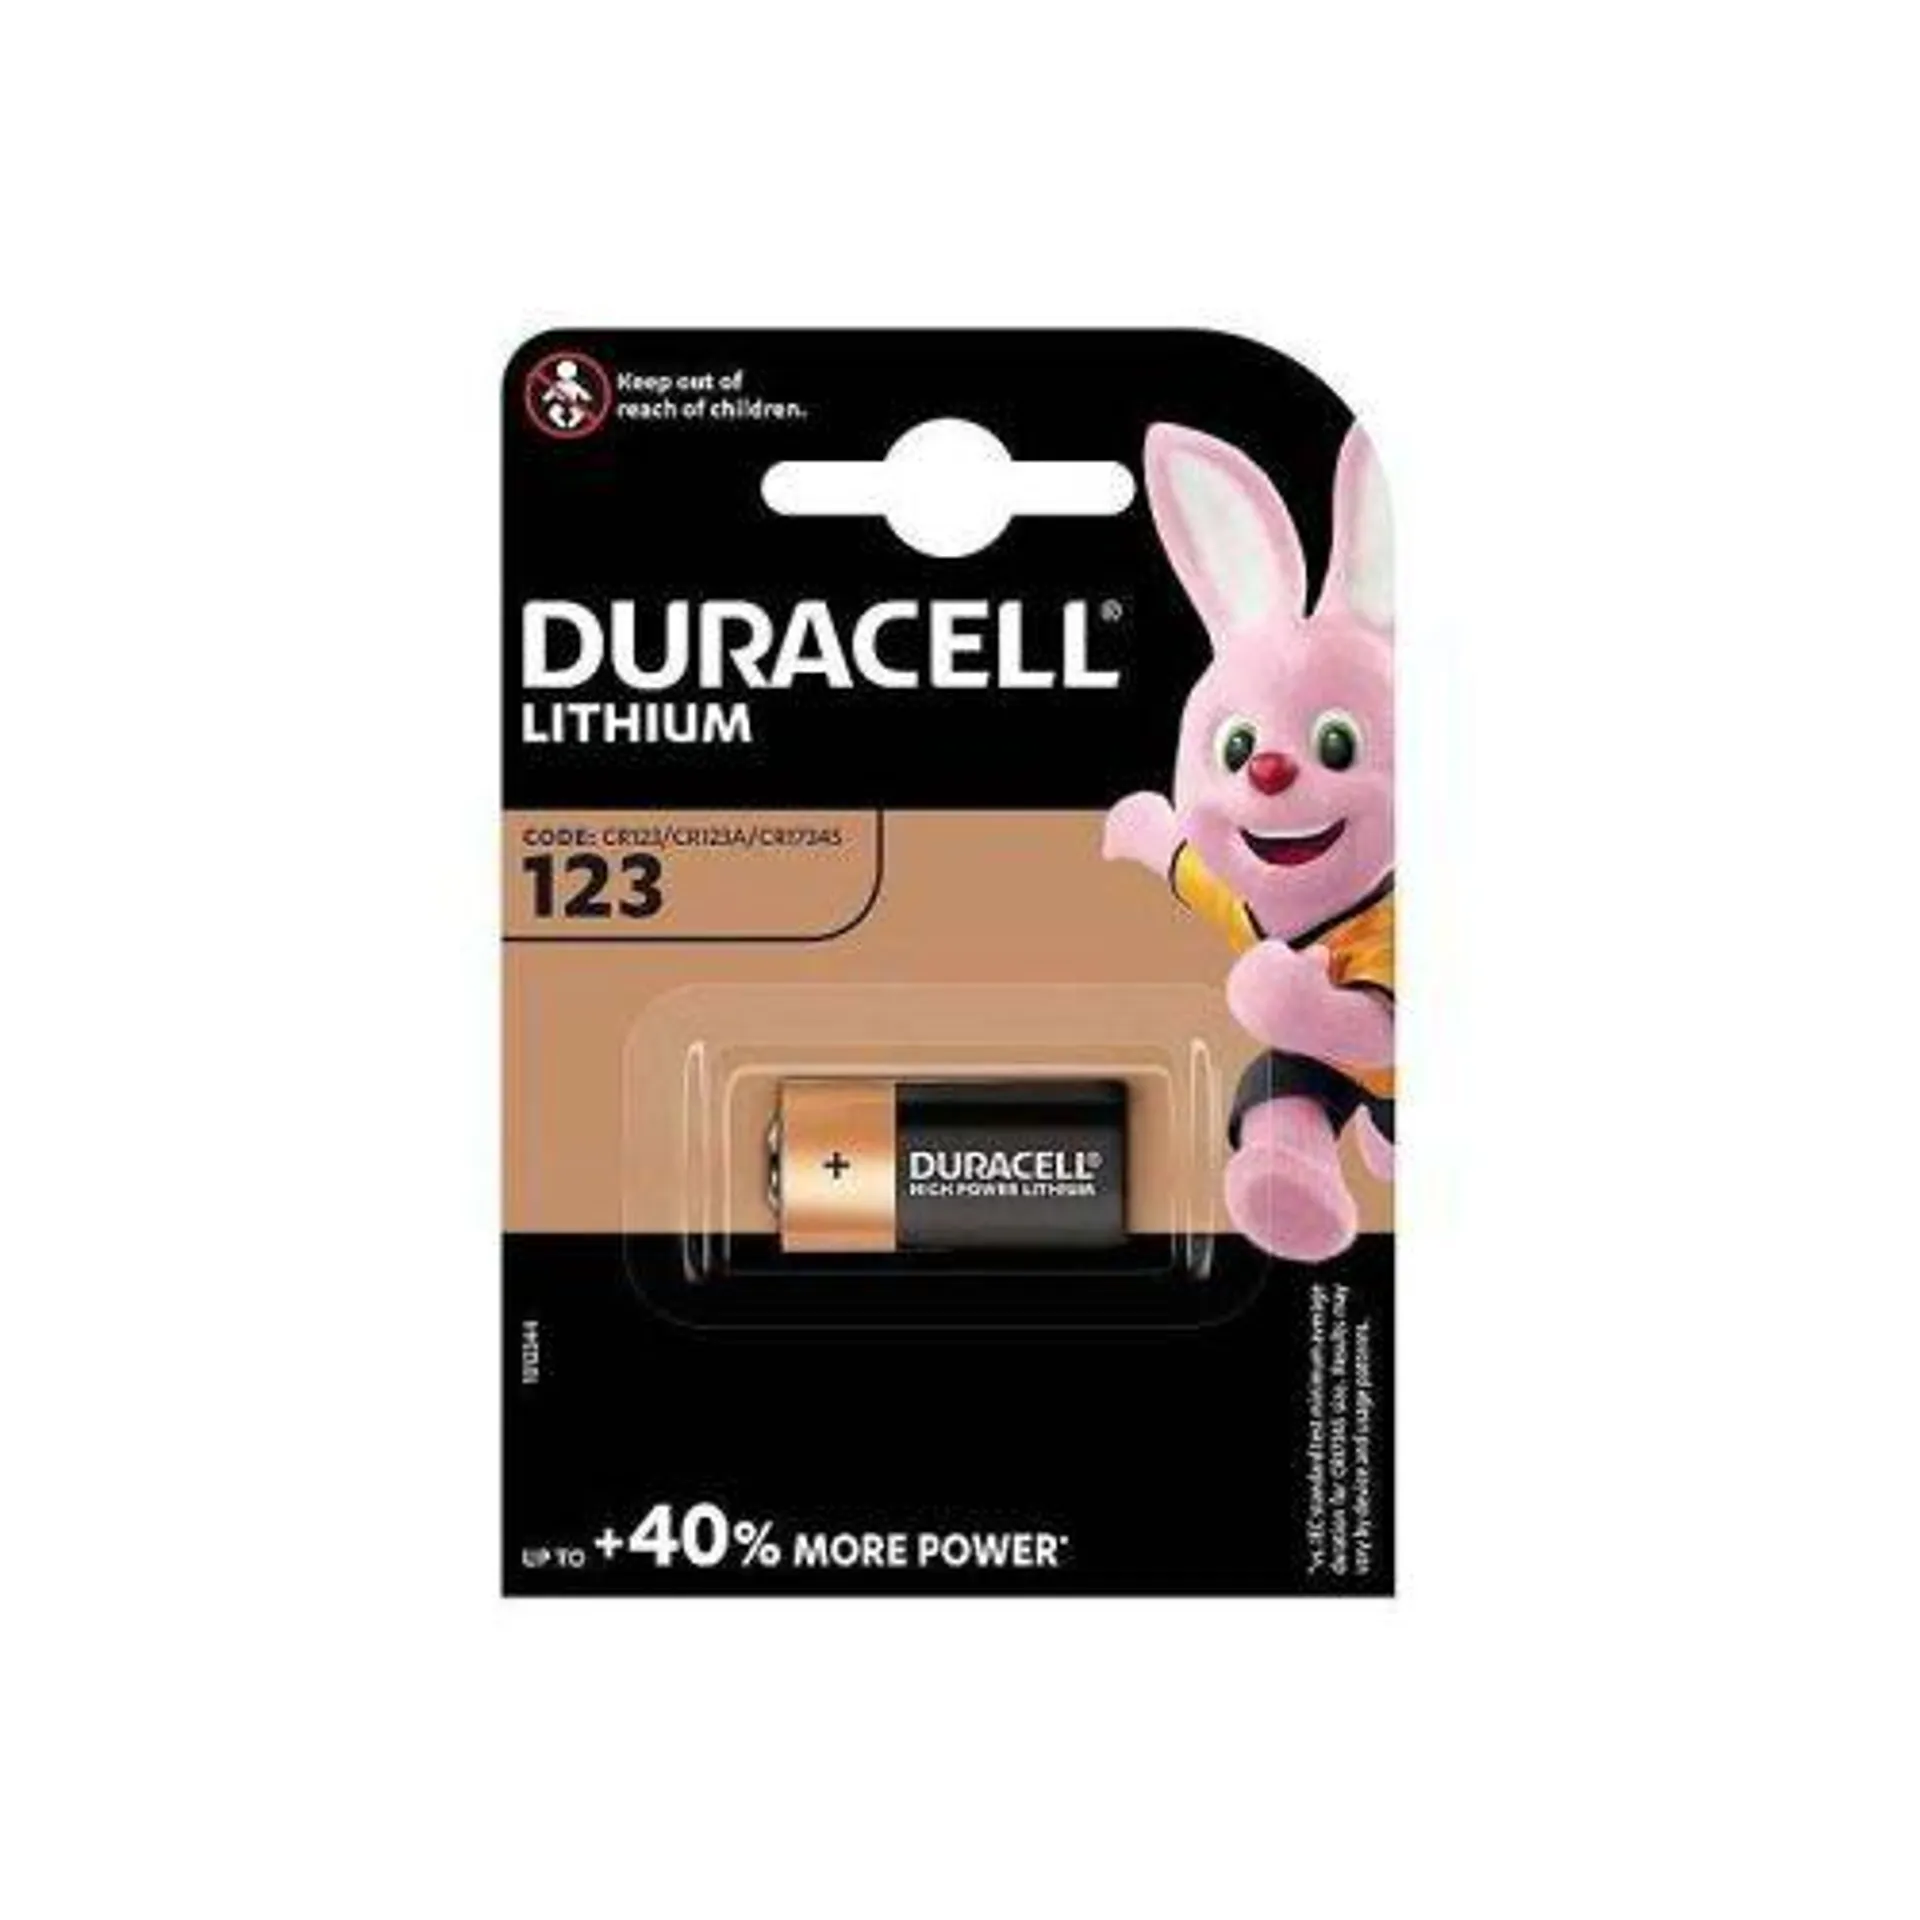 Duracell Lithium Battery CR123/CR123A